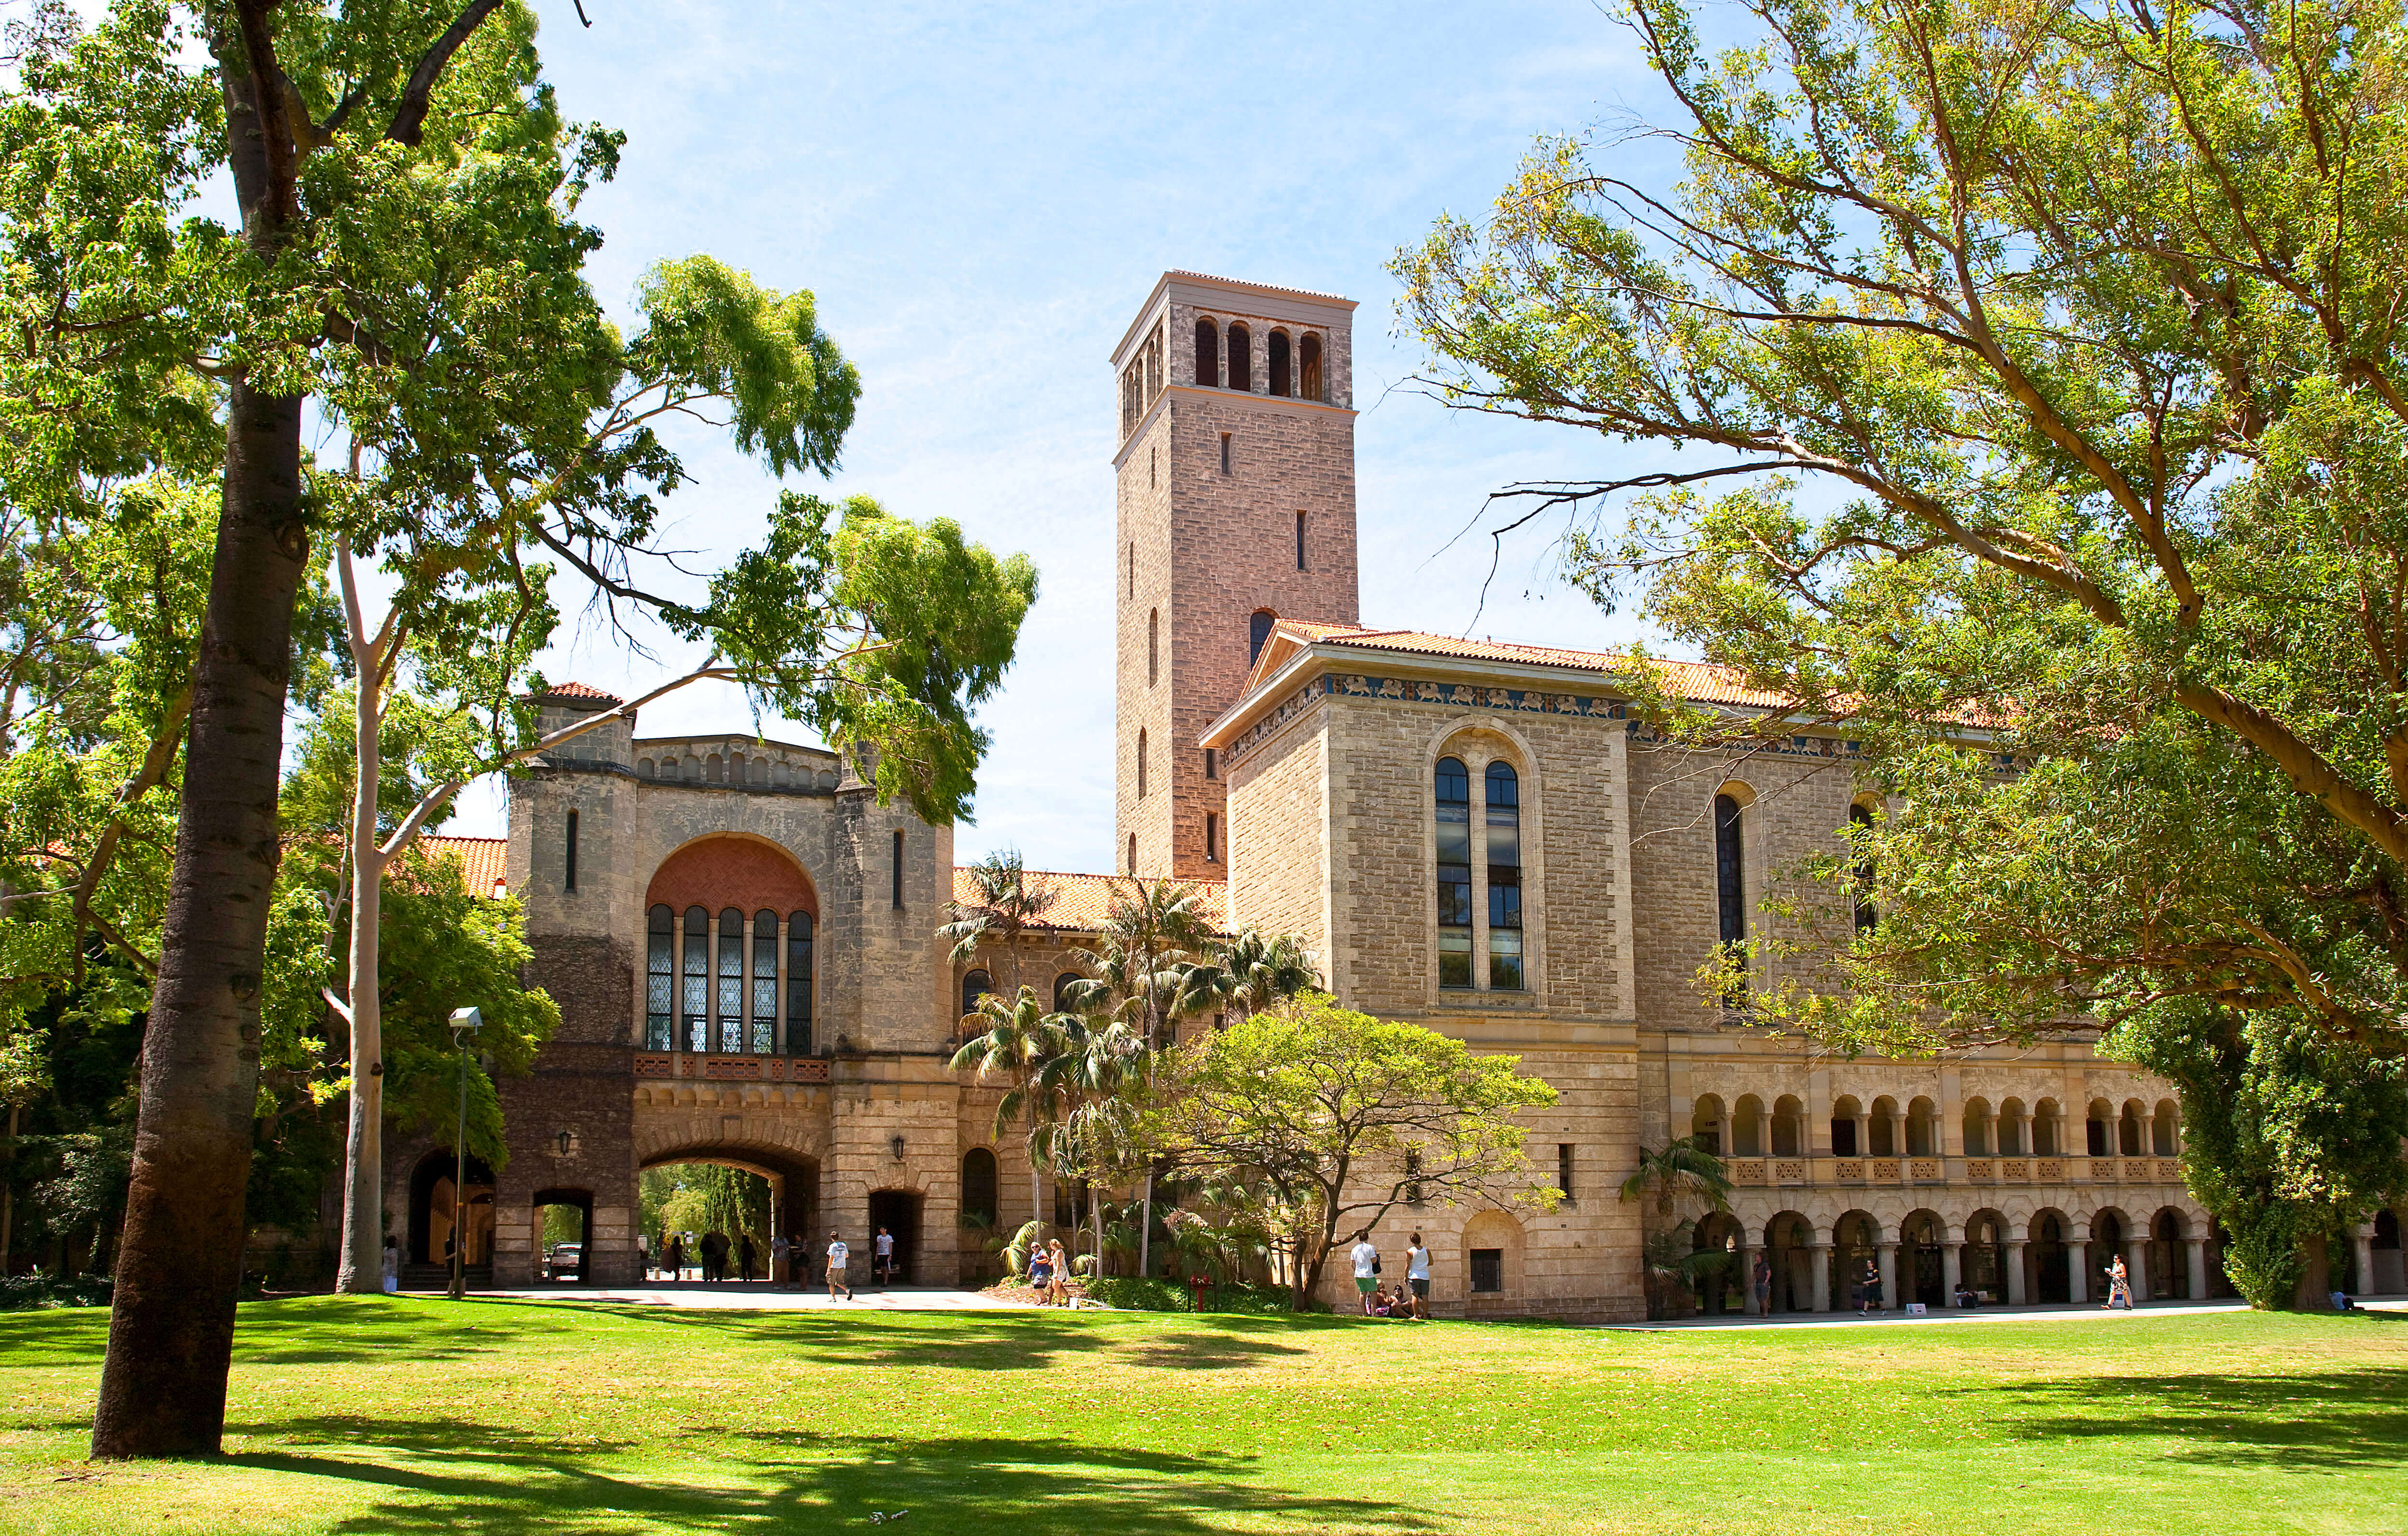 The University of Western Australia: Where employable graduates are made